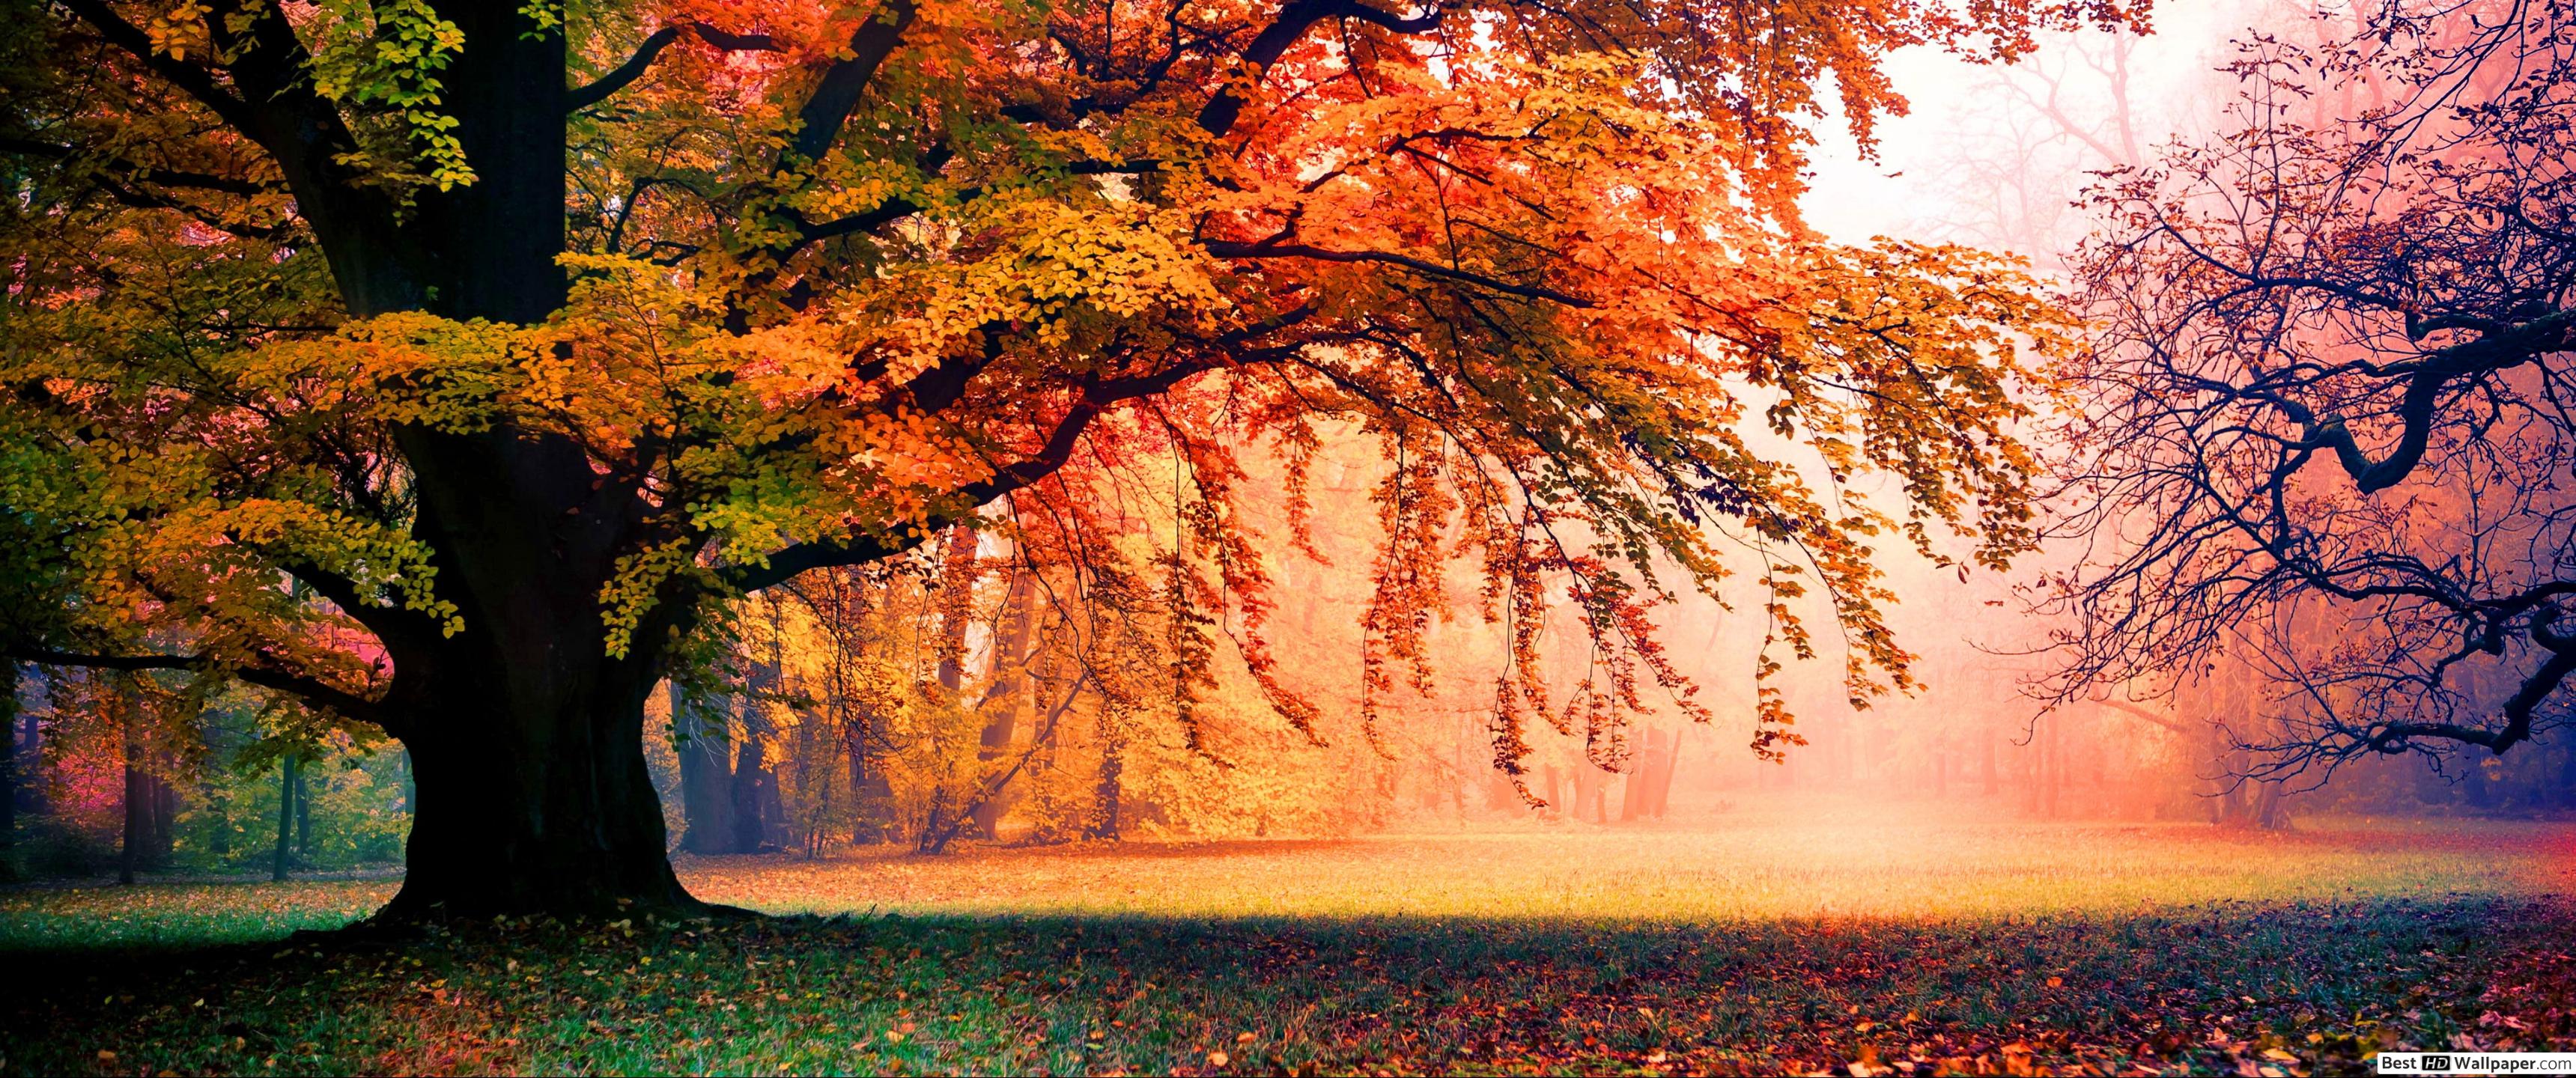 Tree in Misty Autumn Park HD wallpaper download